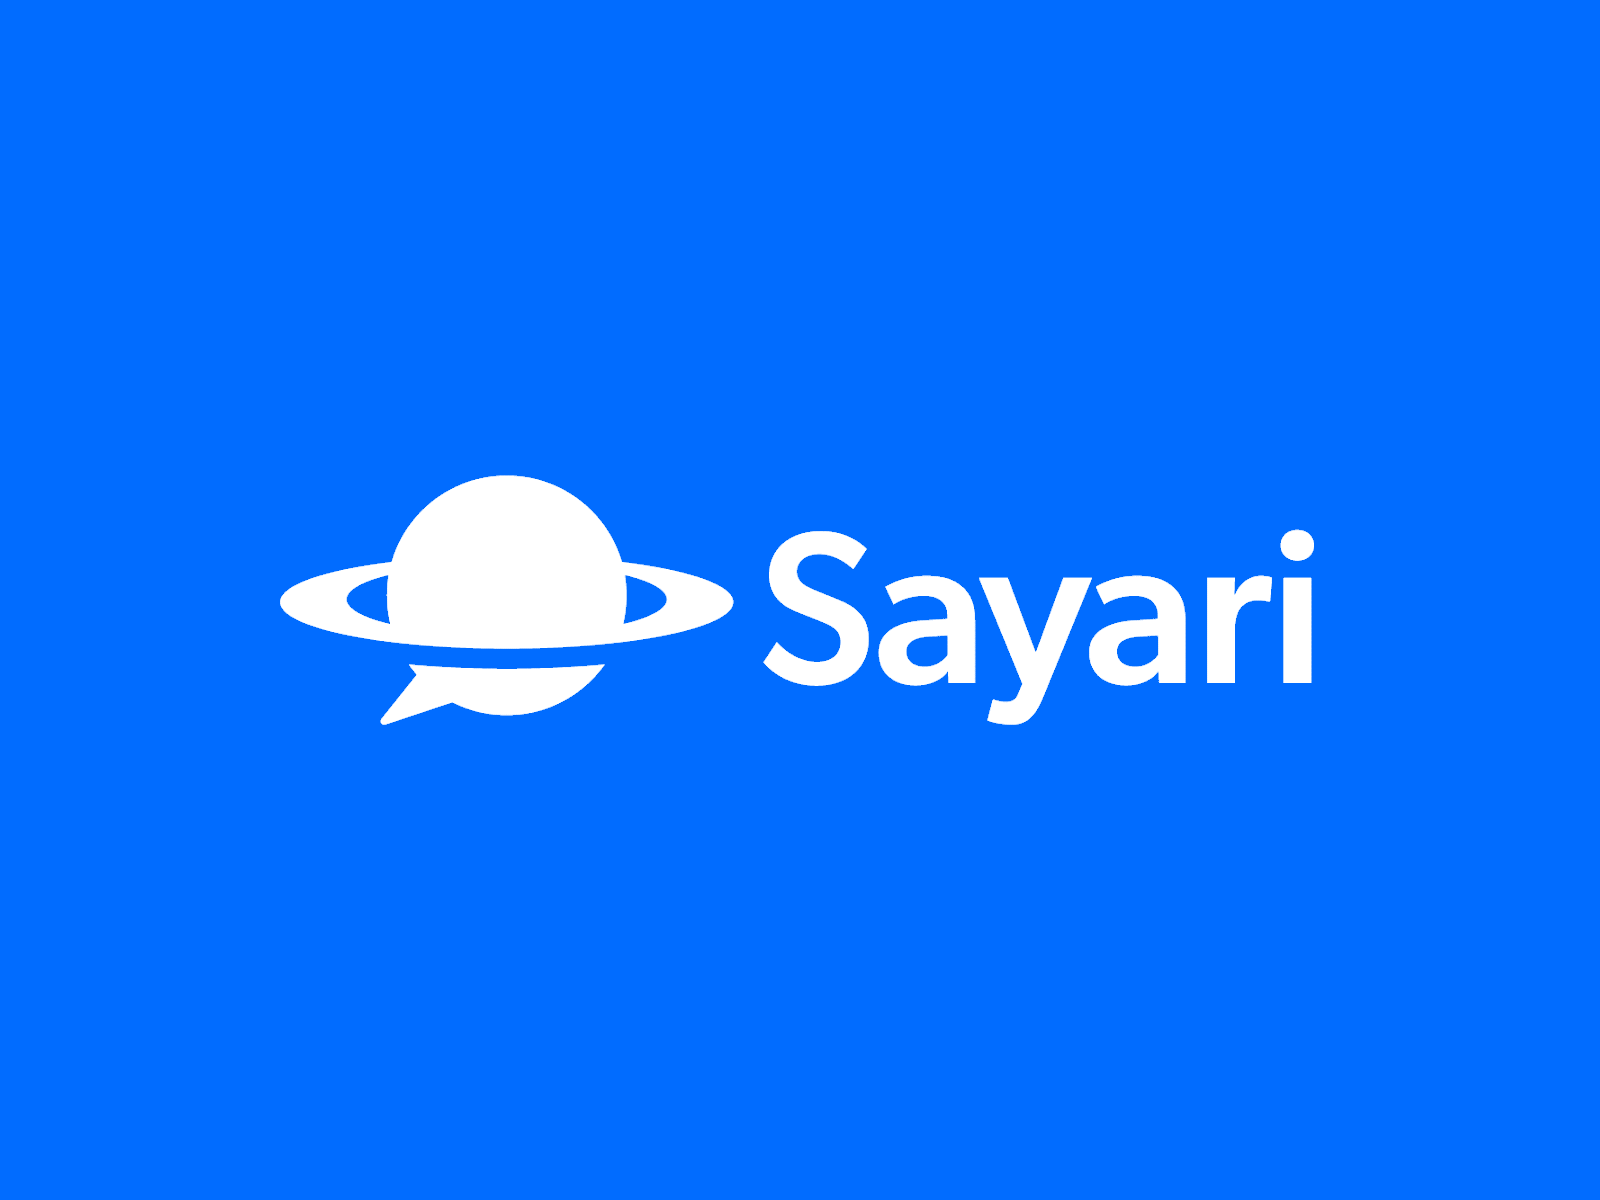 Sayari | Logo Guidelines by Dan Alan on Dribbble